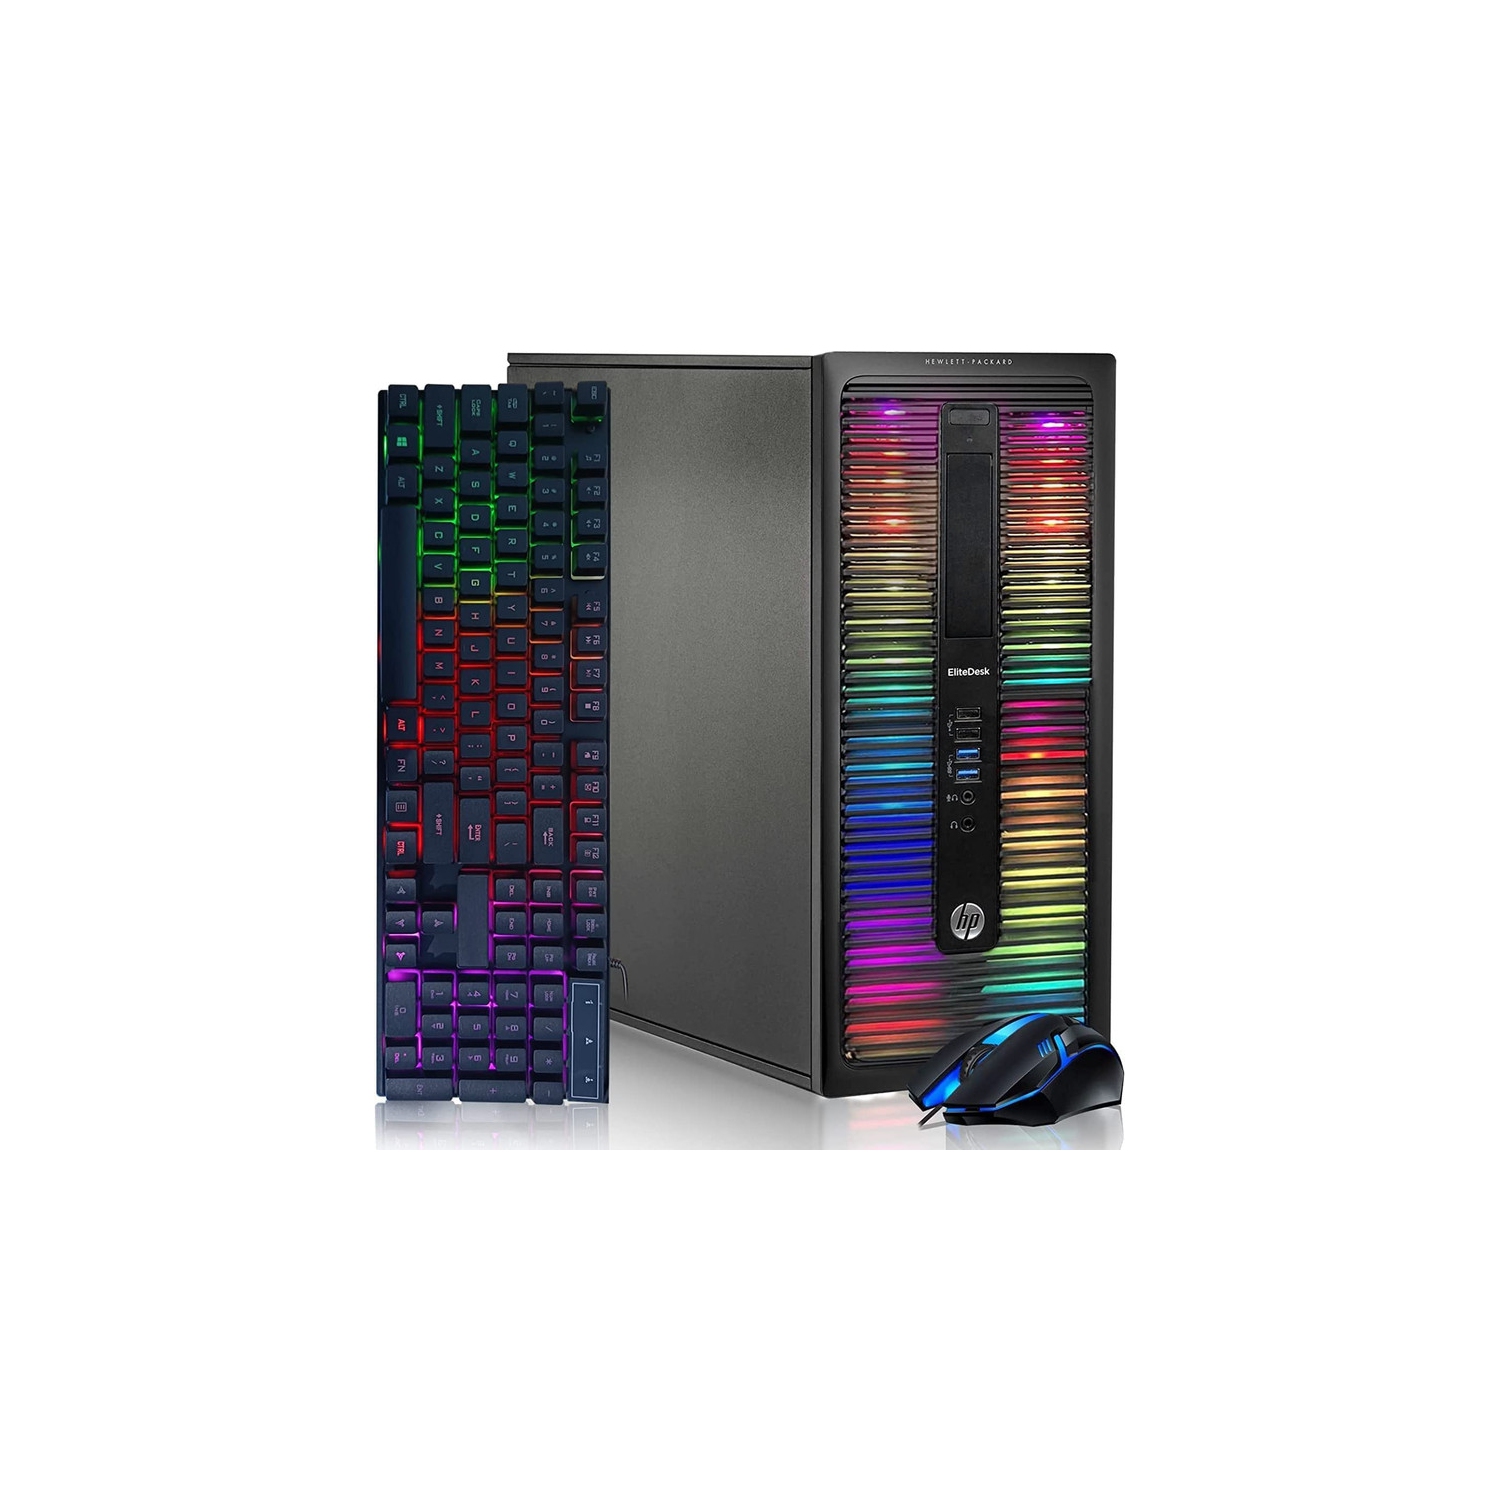 Refurbished (Excellent) - HP RGB Gaming Desktop Computer - Intel Quad I7, 32GB, 512G SSD + 3TB, GeForce GTX 1660 Super, RGB Keyboard & Mouse, WiFi & BT 5.0, Win 10 Pro